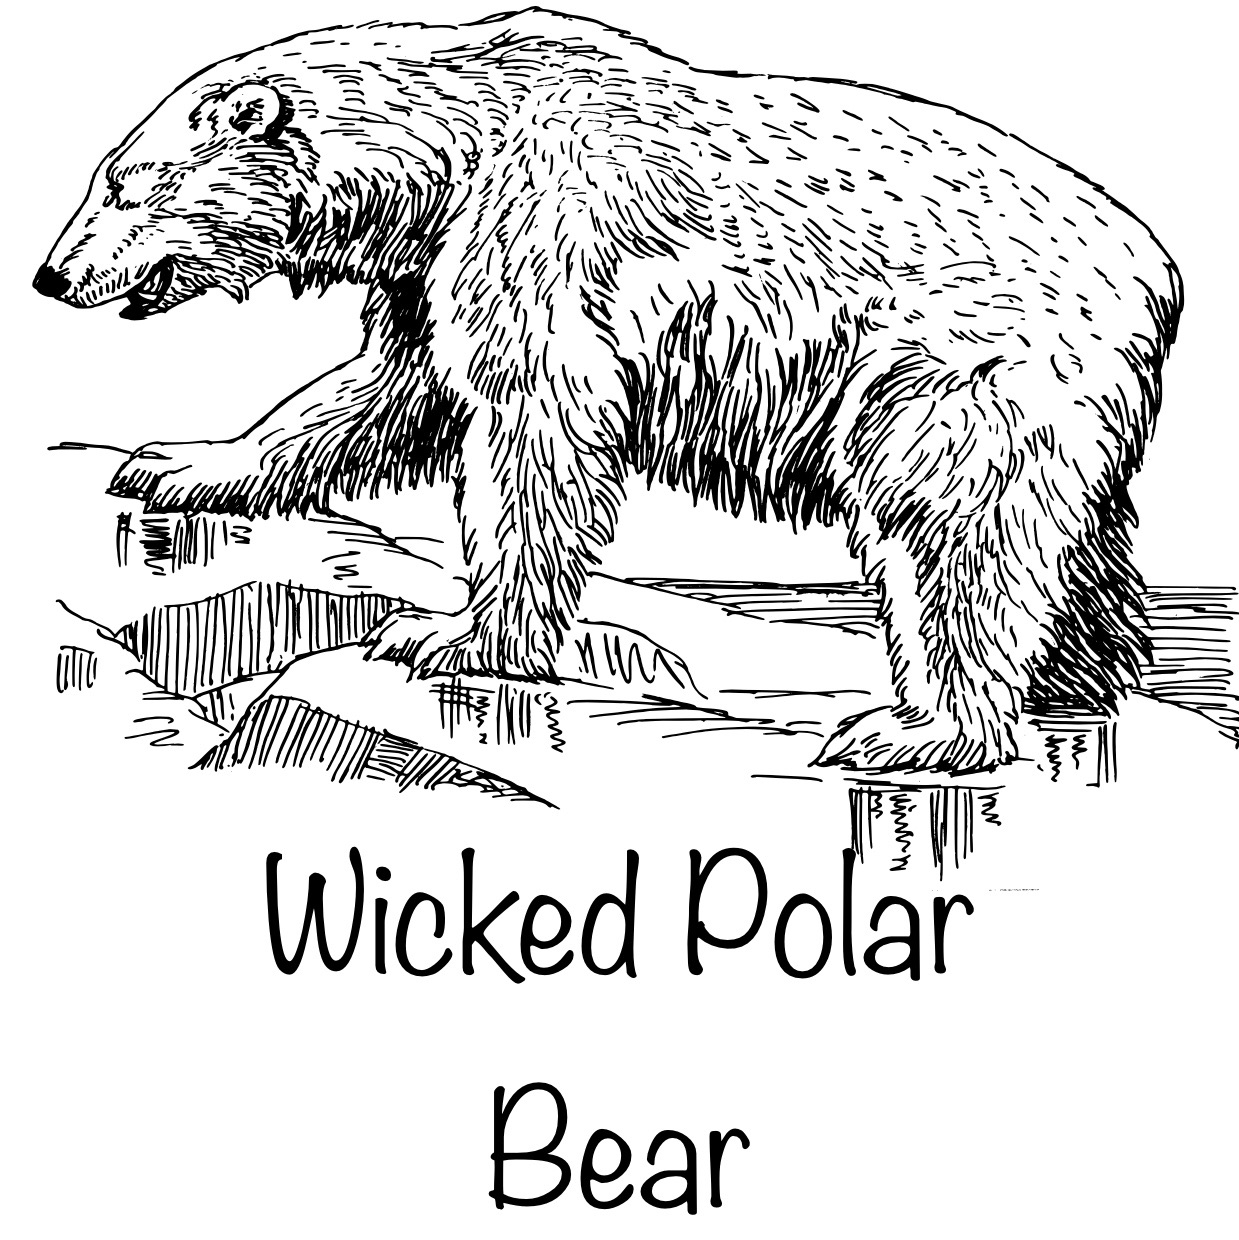 The Wicked, Wicked Polar Bear - All Stories Audiobooks - Free Audio Books | Knigi-Audio.com/en/